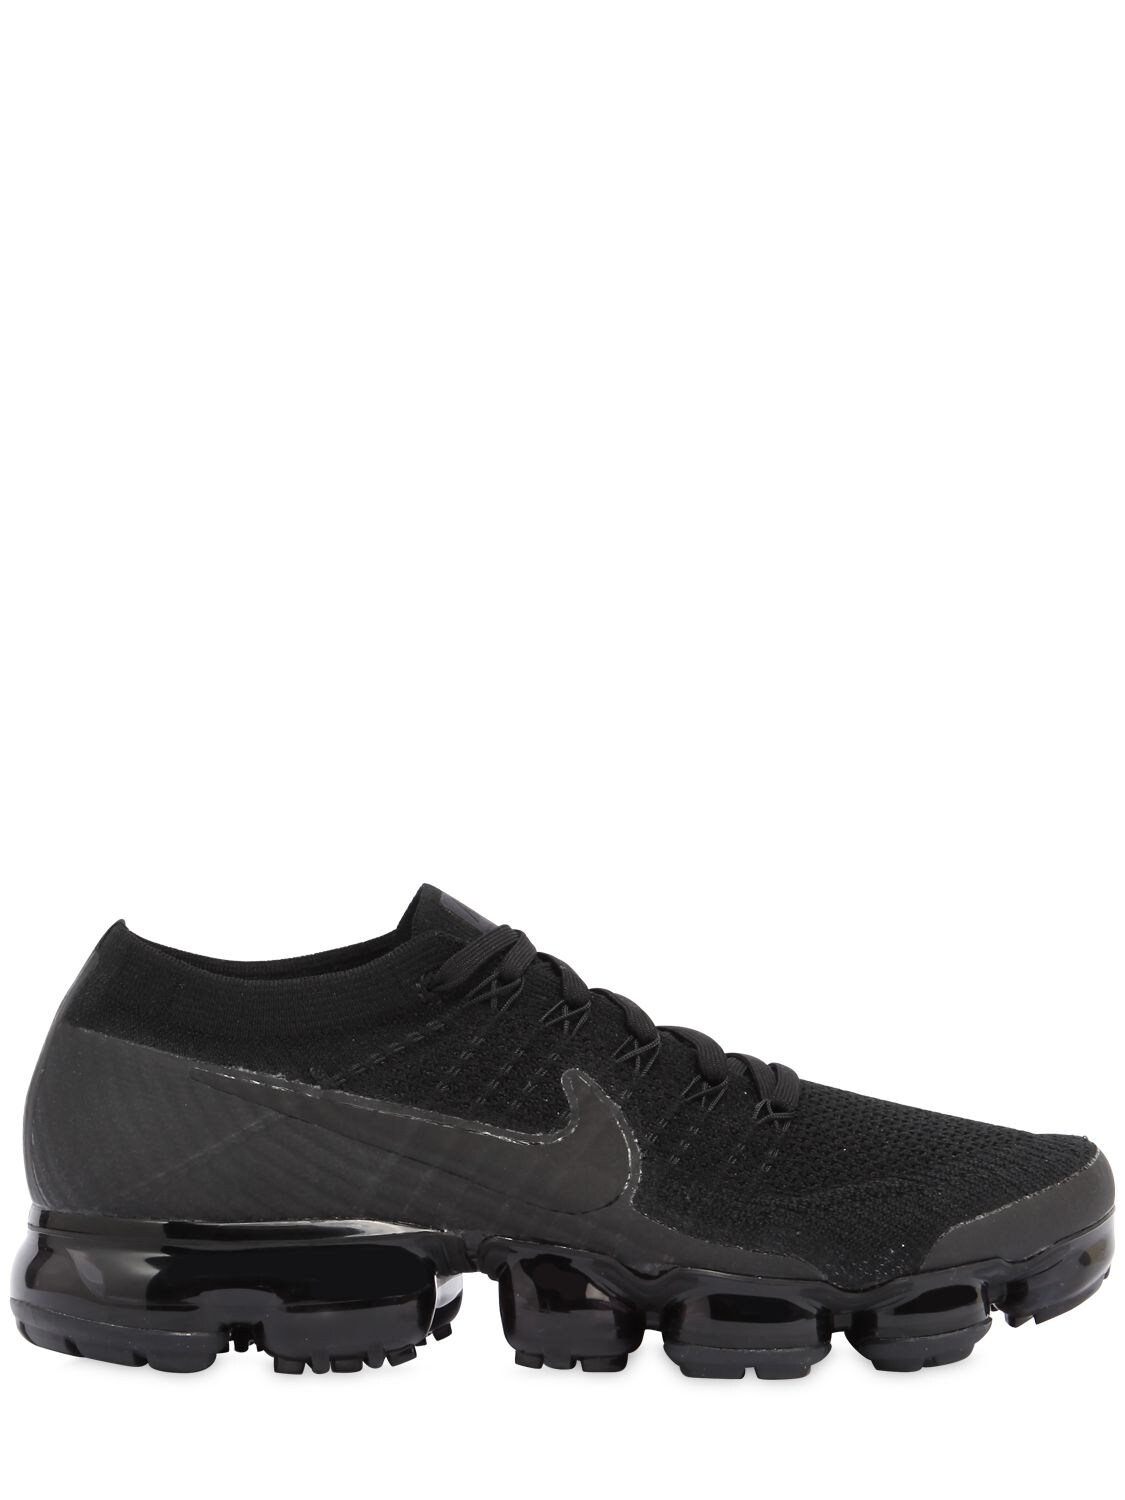 Nike Air Vapormax Flyknit Sneakers In Black